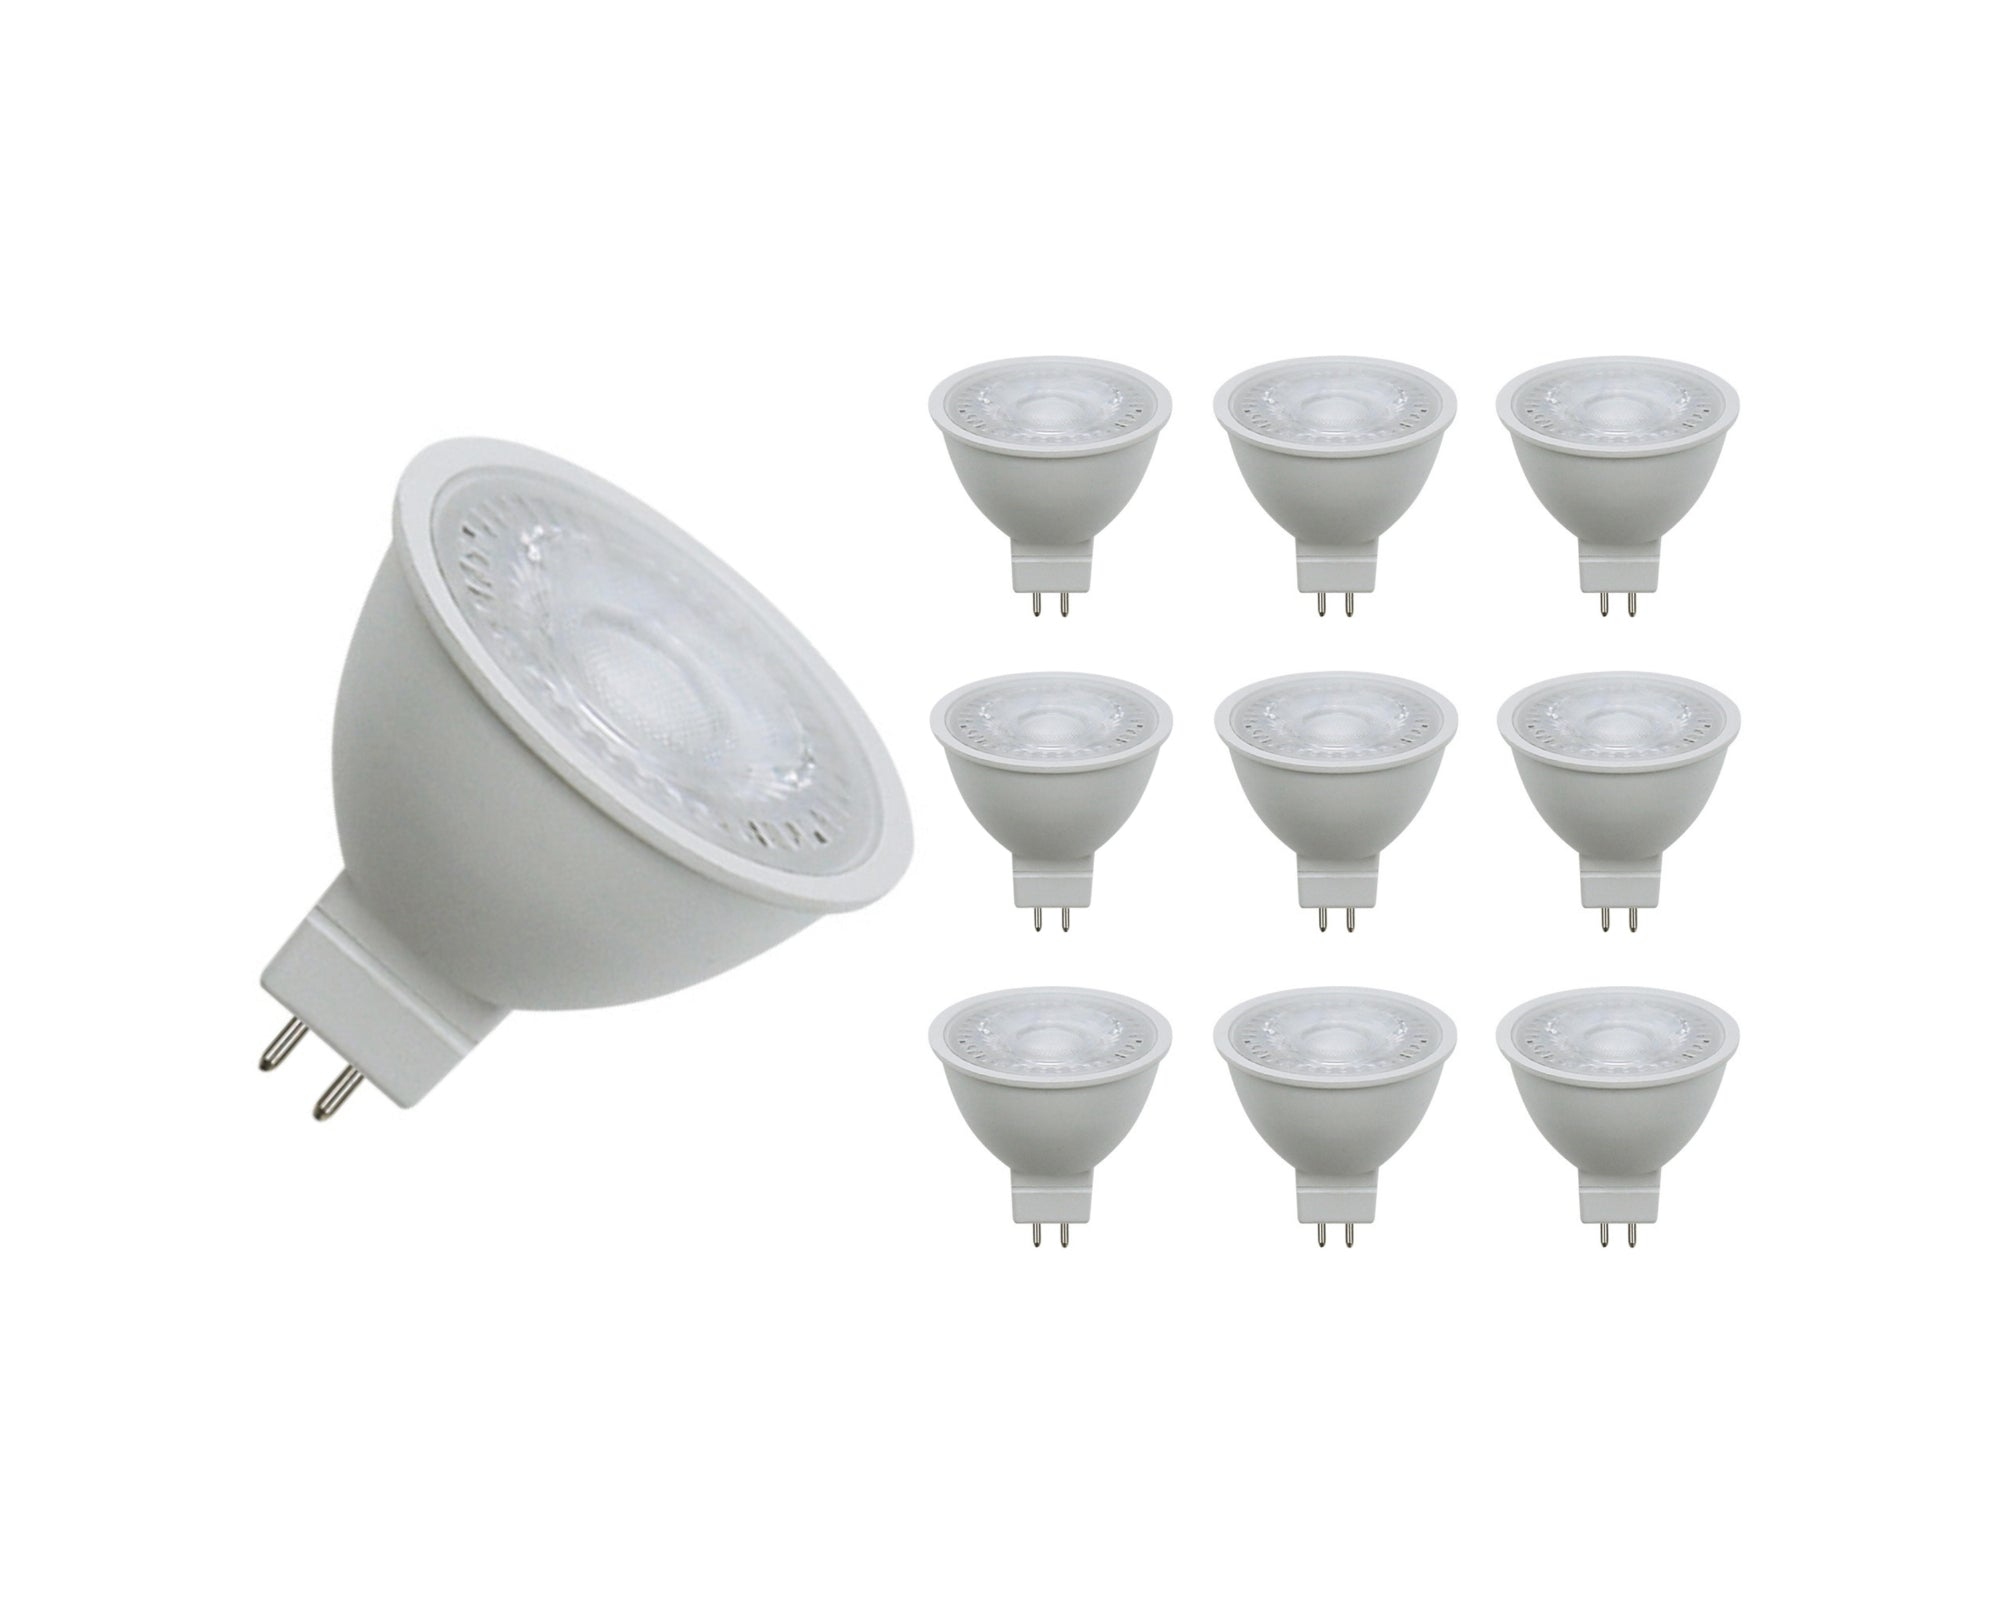 Lumina Lighting® 4W MR16 LED Bulb | AC/DC 12V 3000K Warm White 380 Lumens | (10-Pack)